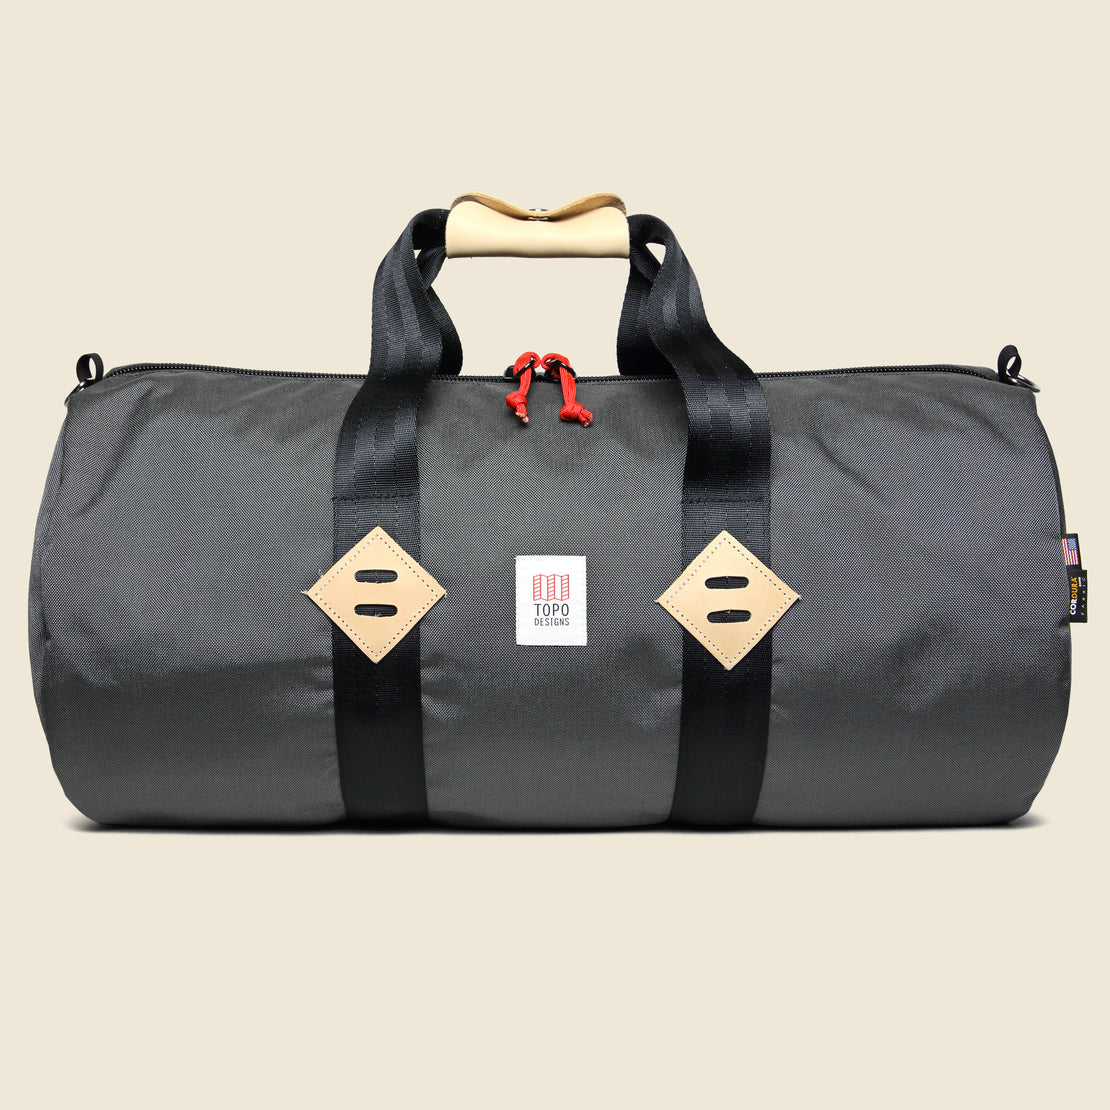 Topo Designs Classic Duffel Bag - Charcoal